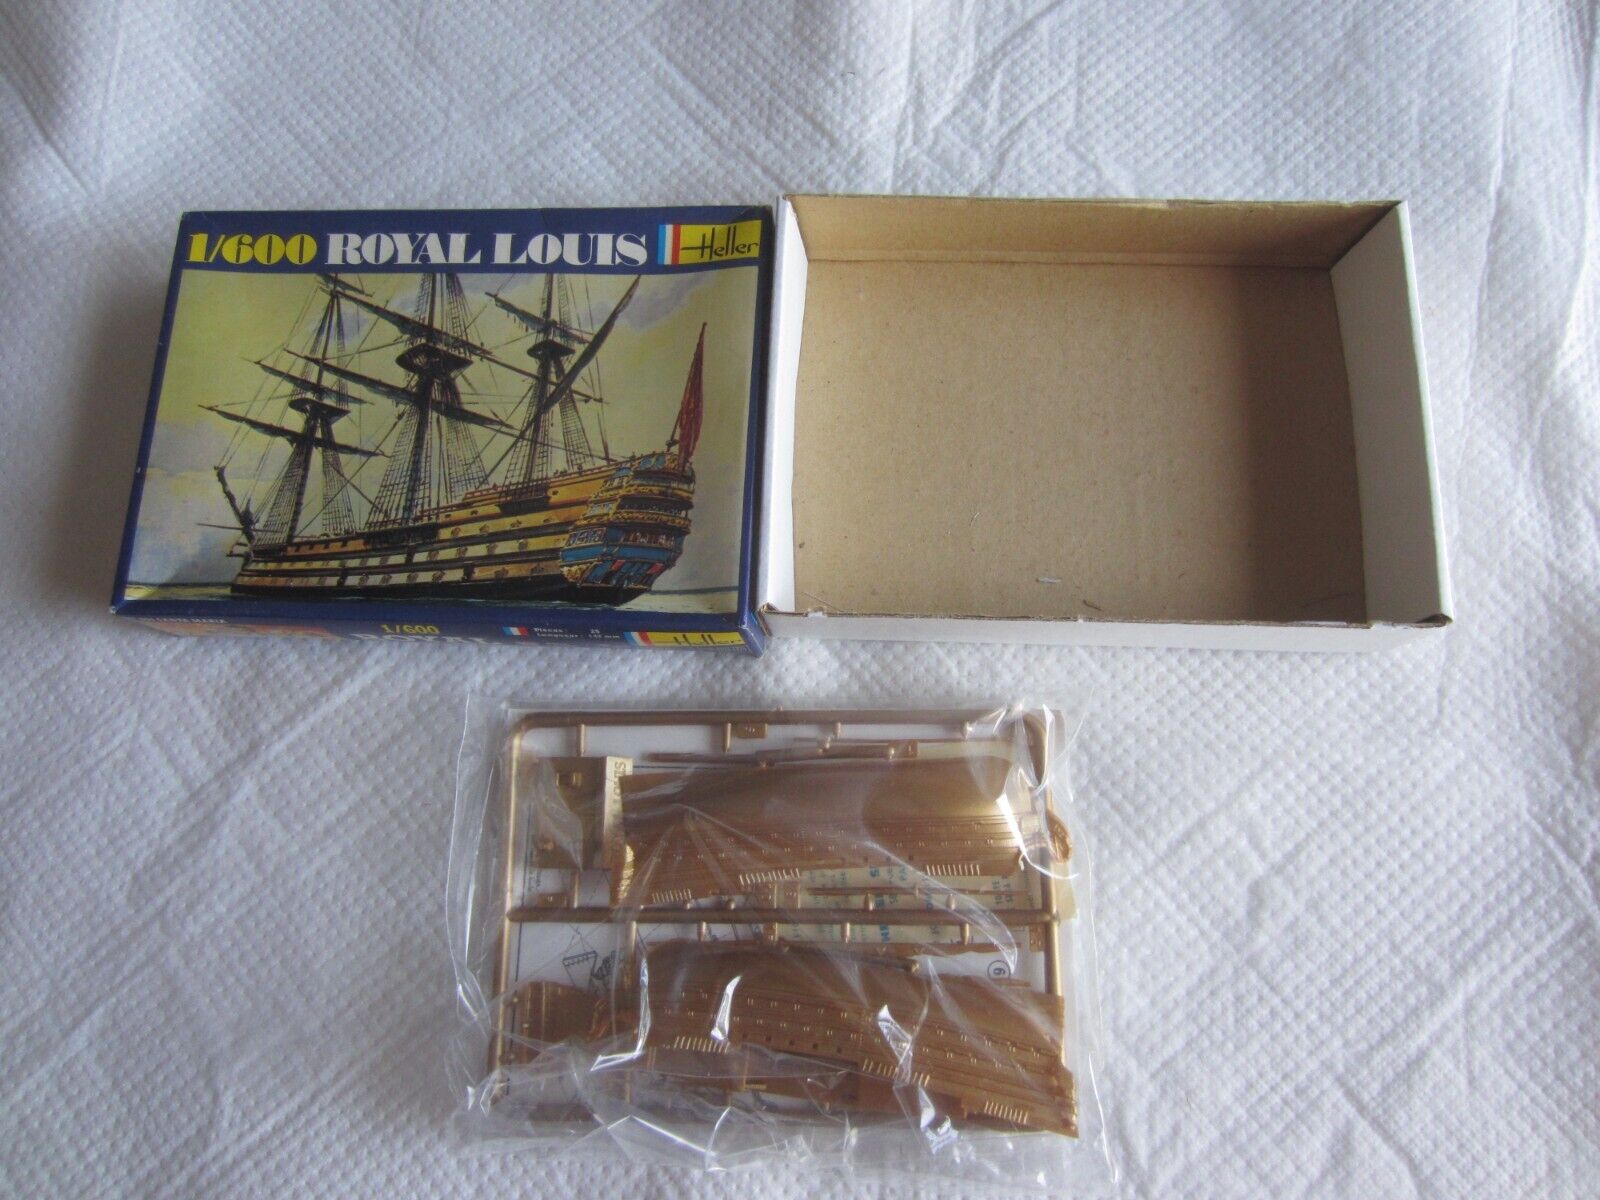 Heller No. 012 Royal Louis 1/600 Scale Model Kit